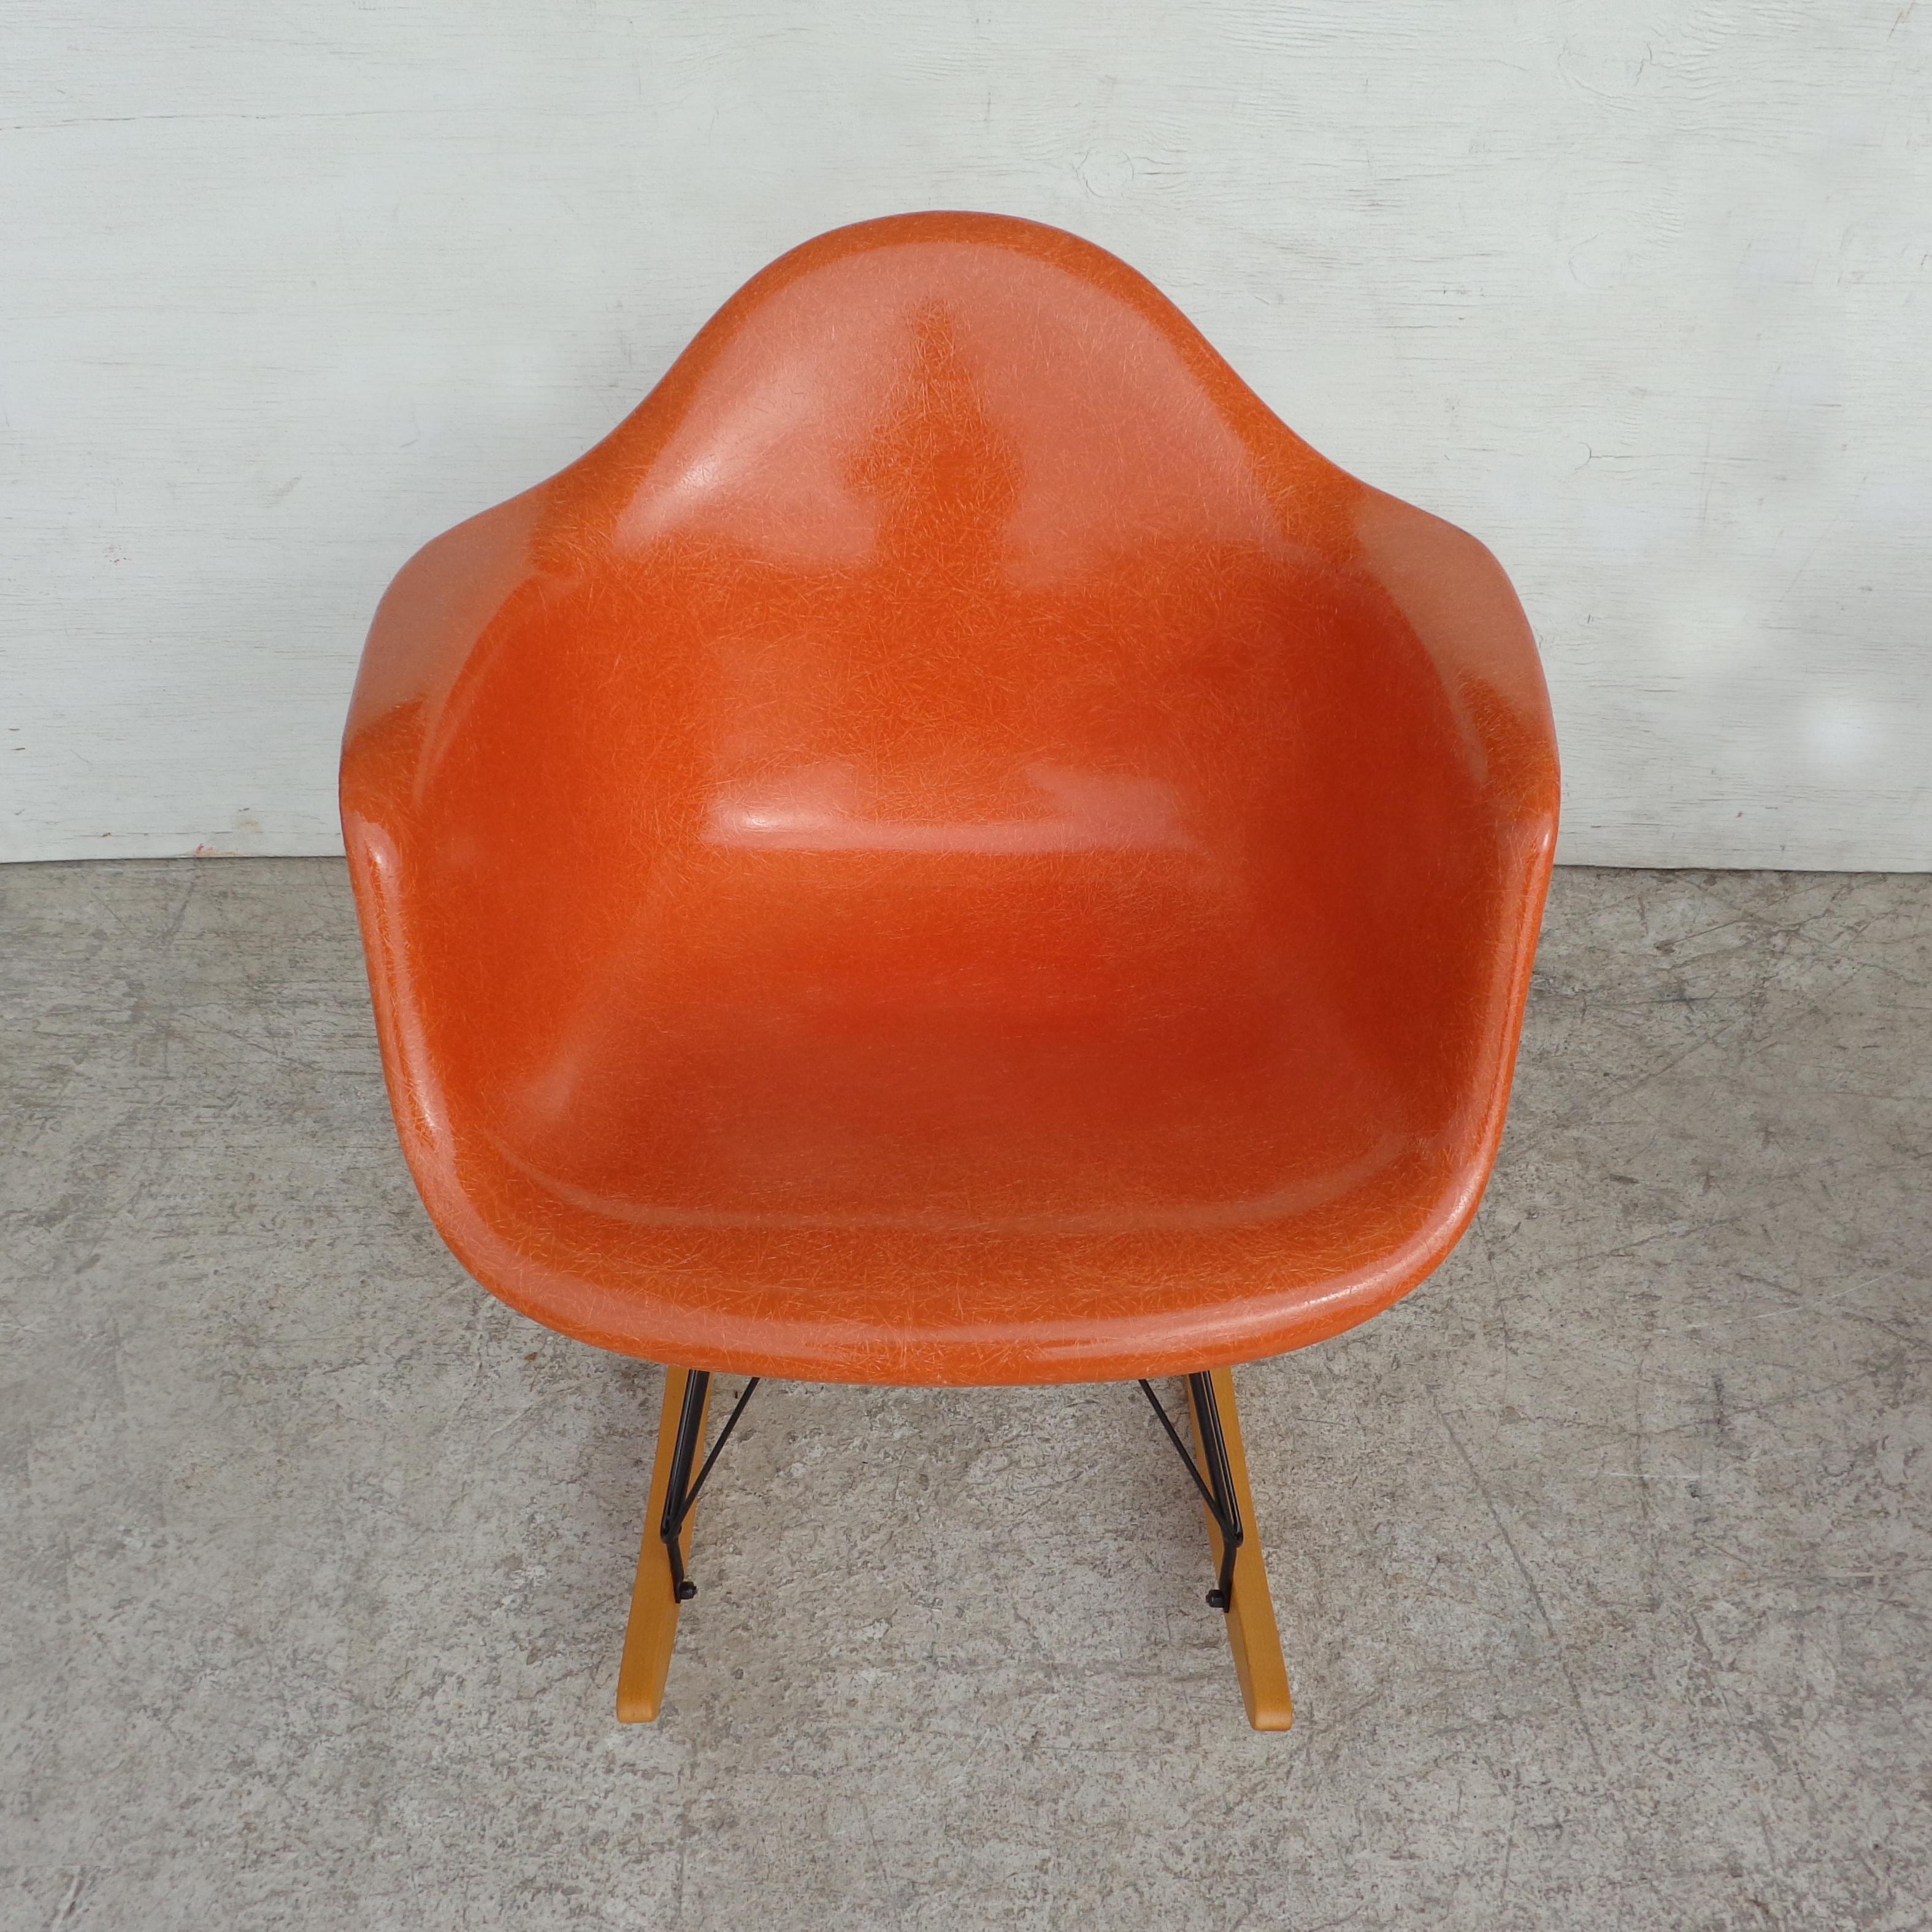 20ième siècle 1 Herman Miller Orange Shell Fiberglass RAR Rocker par Eames en vente